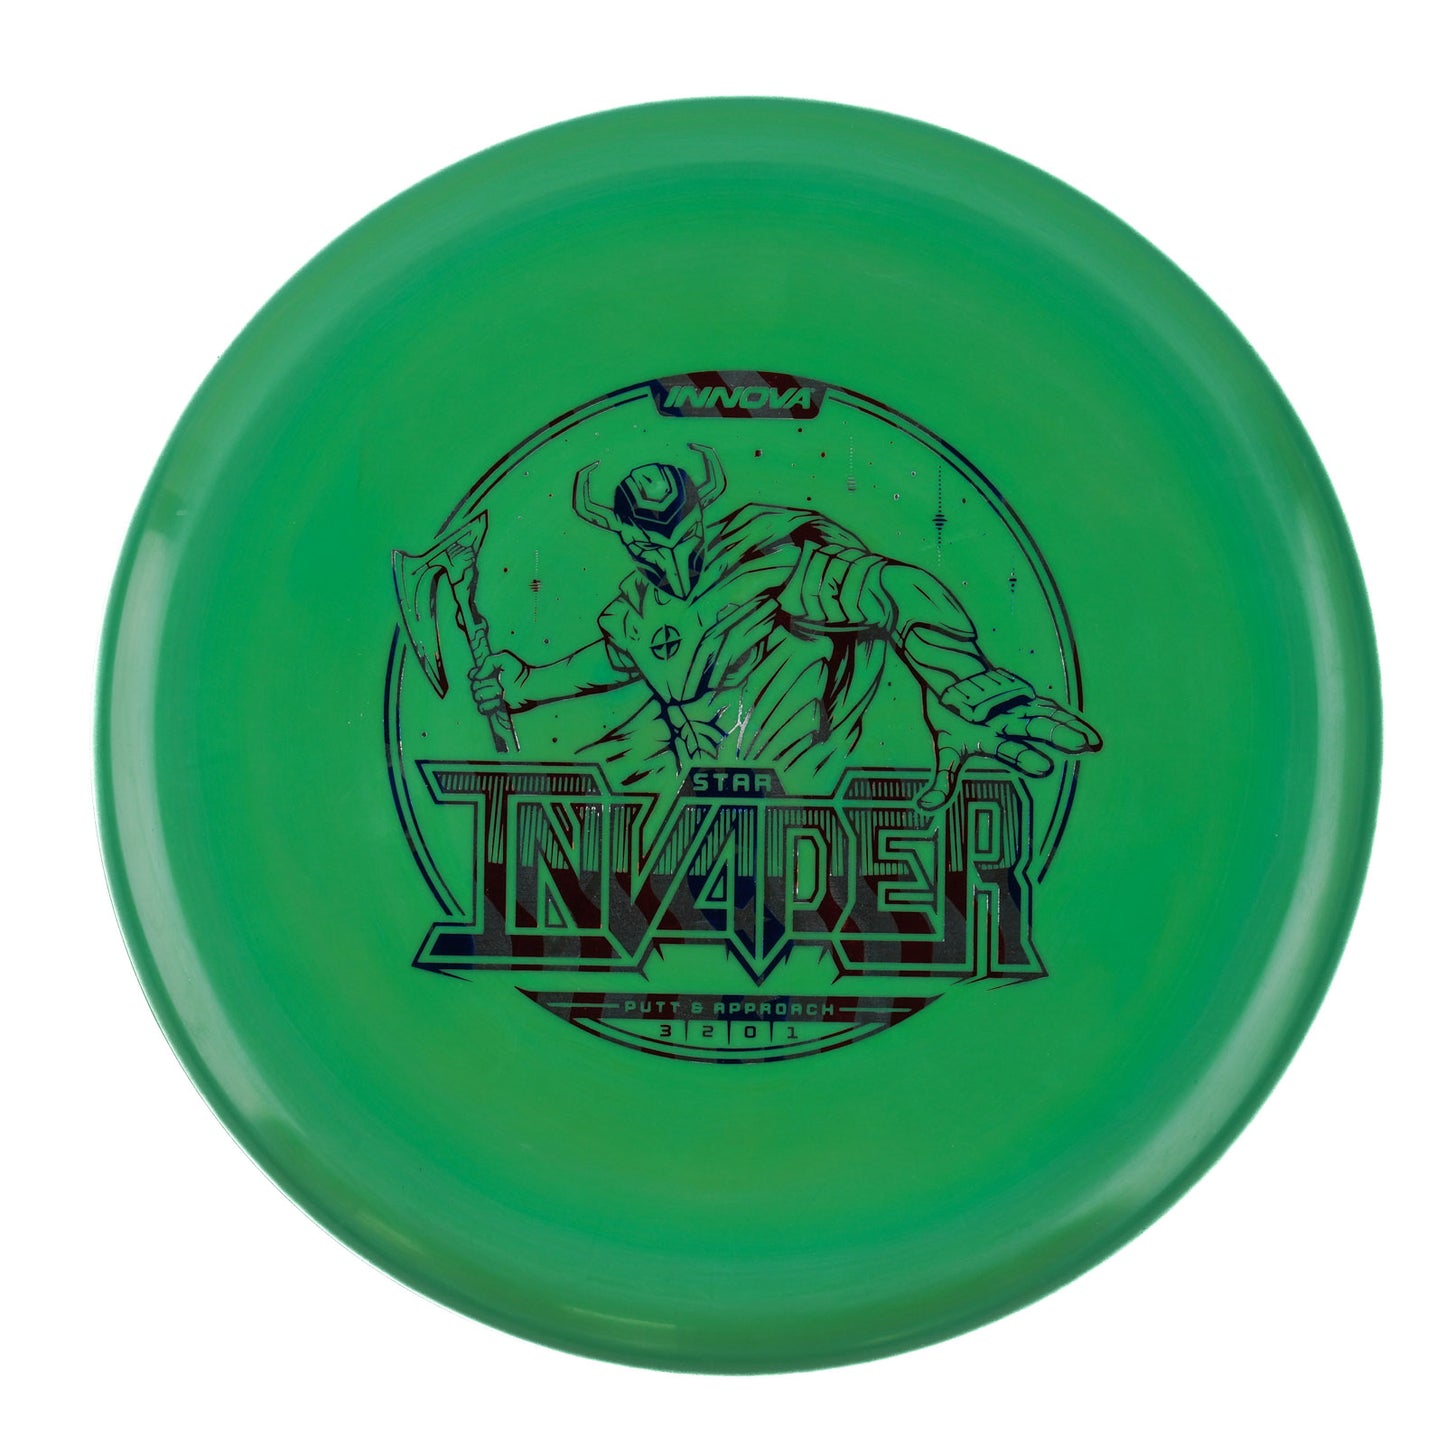 Innova Invader - Star 170g | Style 0001